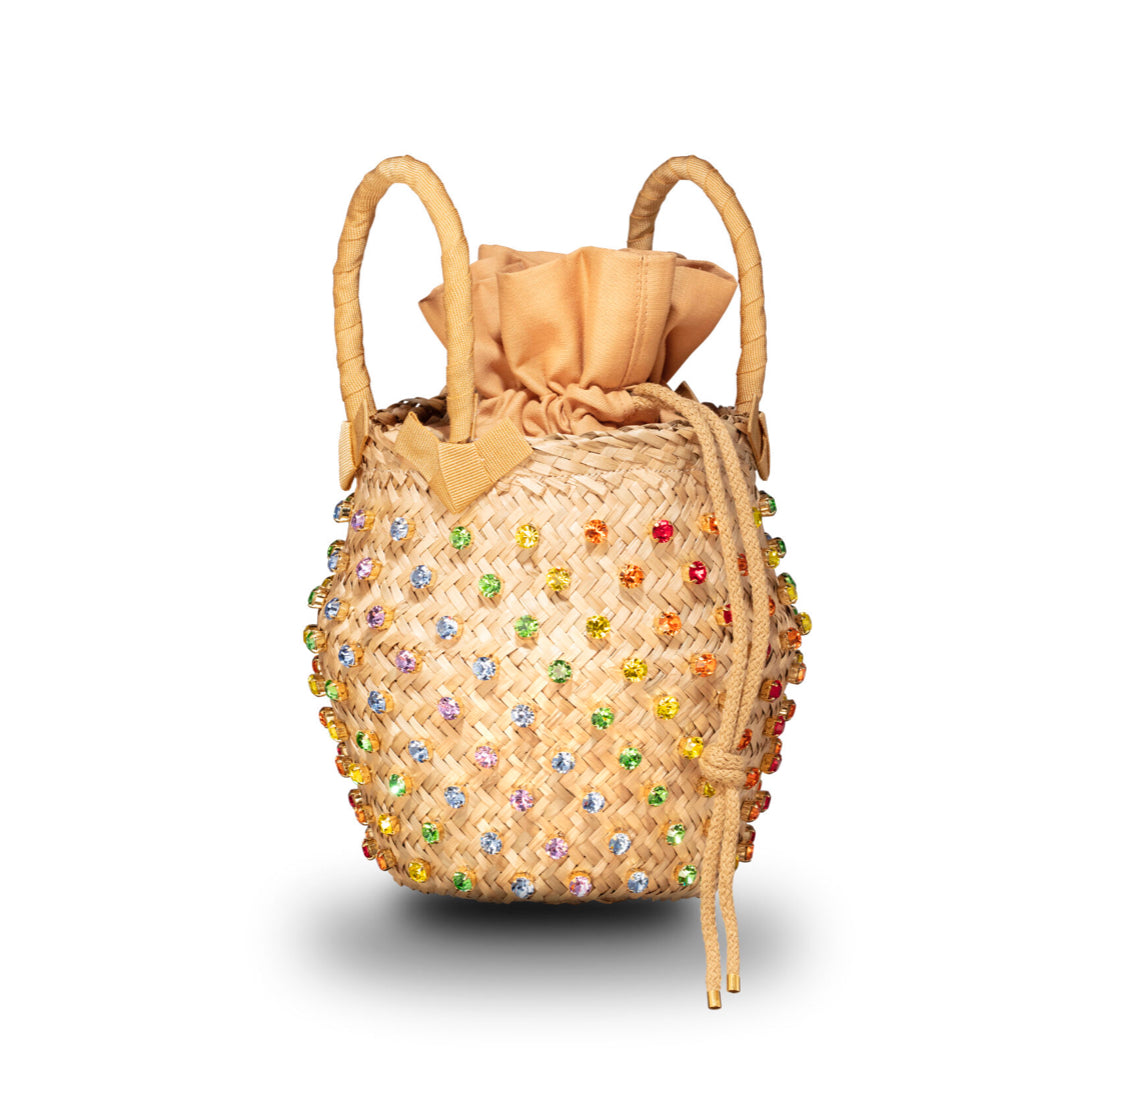 Fashion accessories print tote bag – Lalana Arts